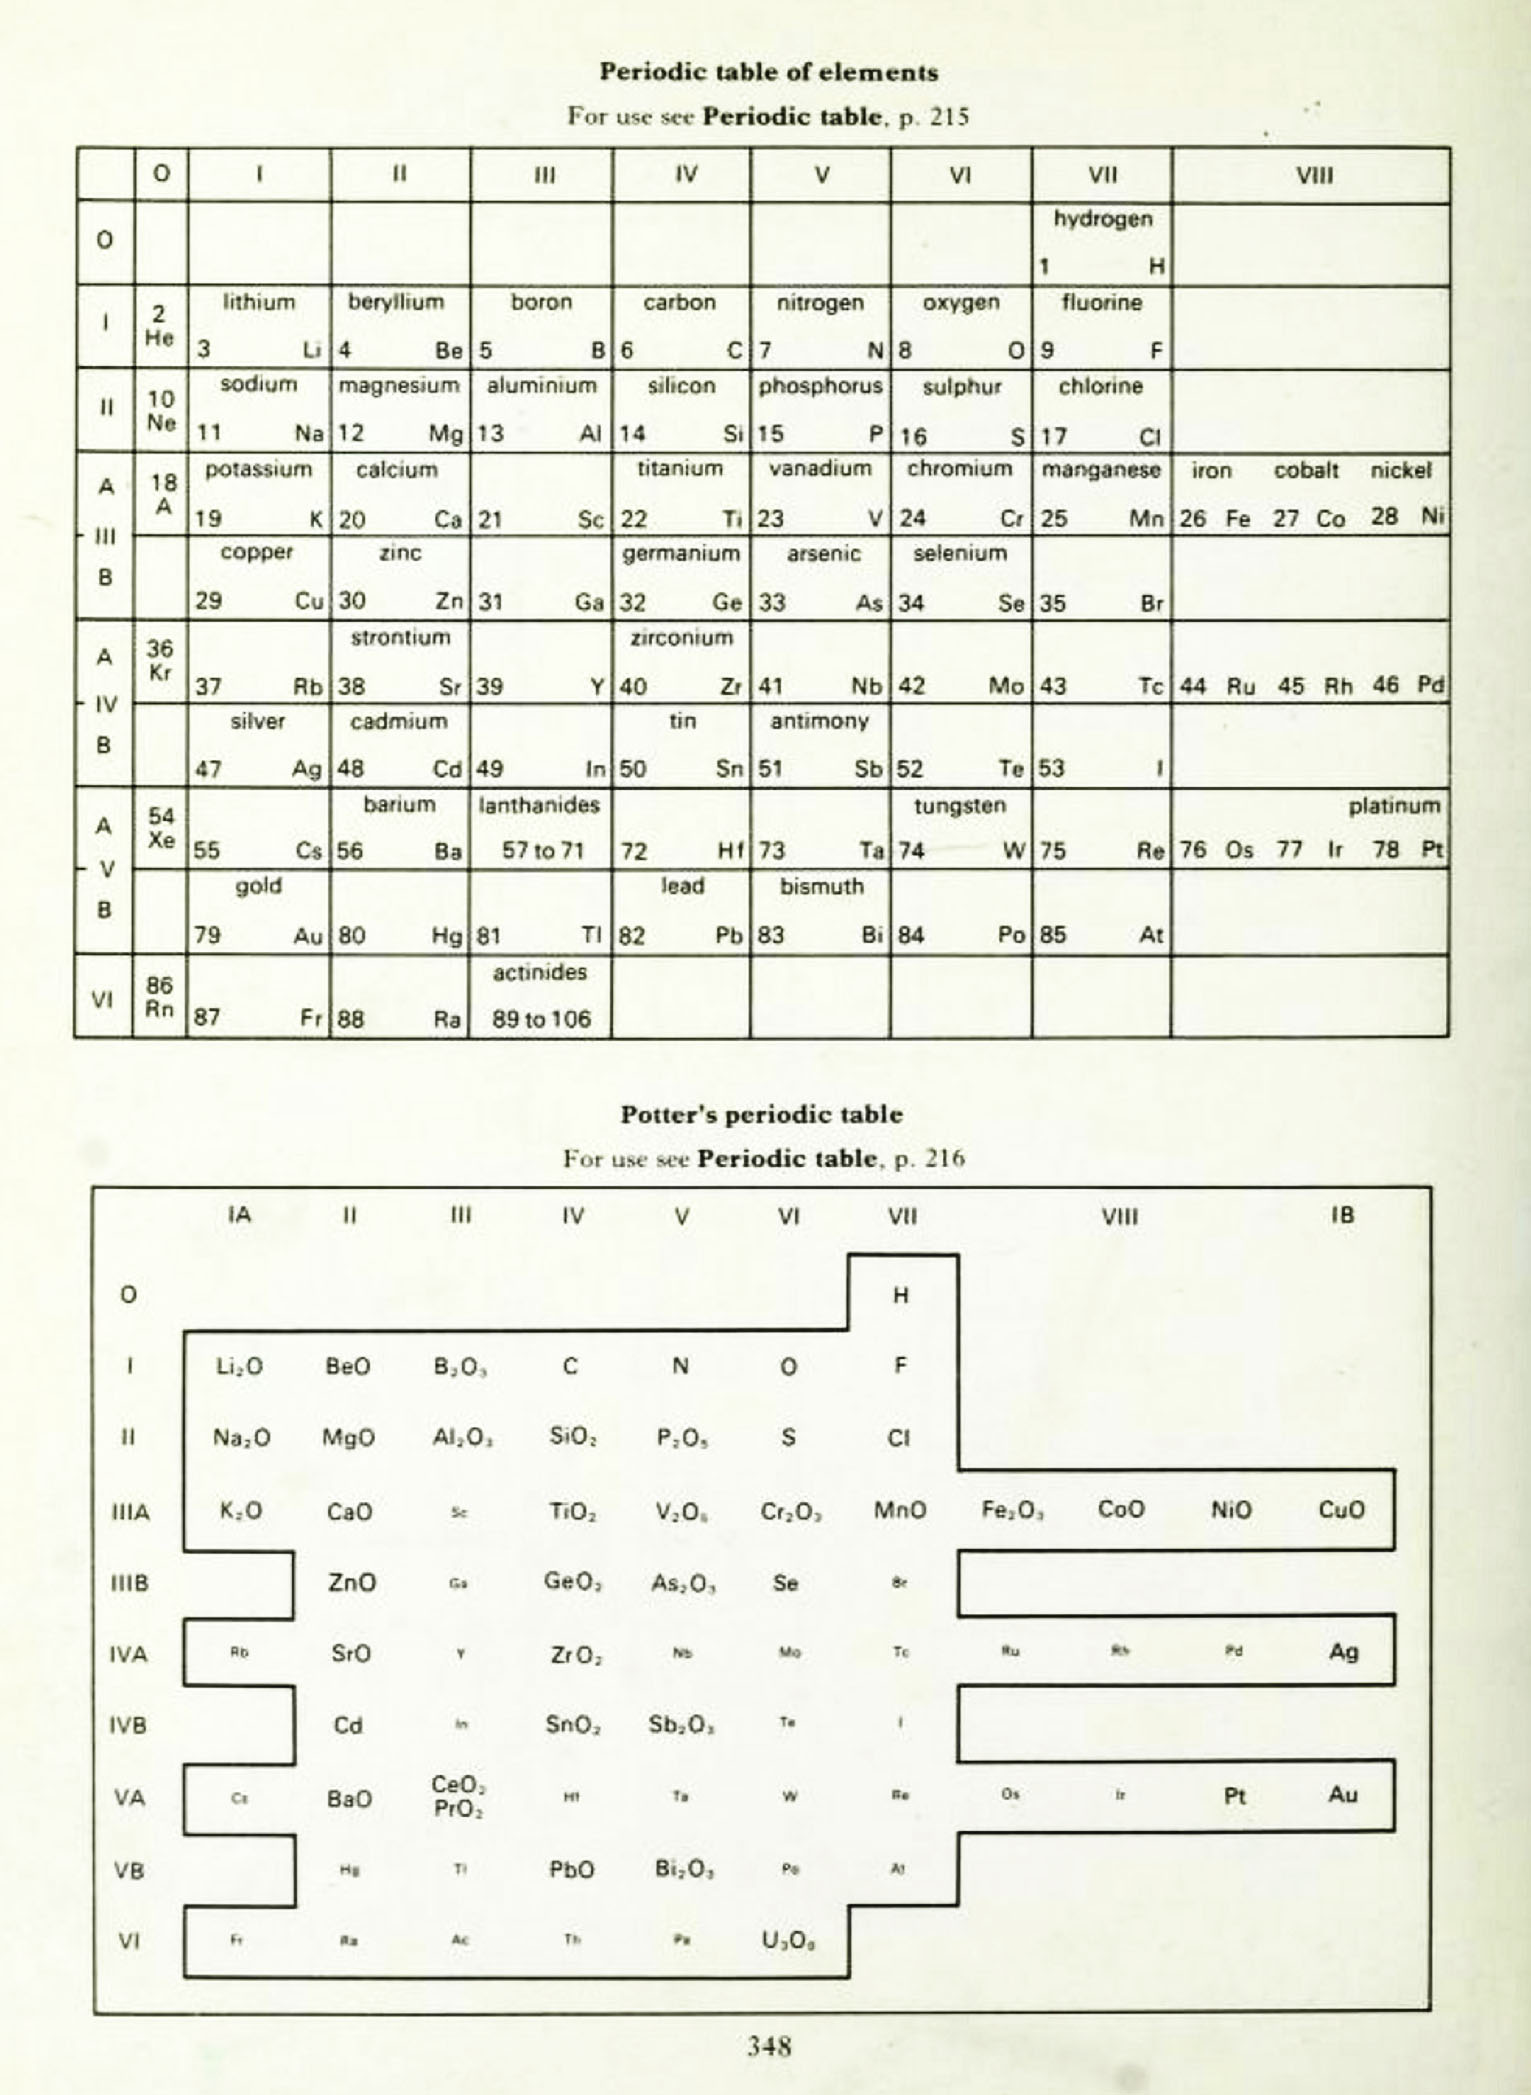 Hamer's Potter's Periodic Table